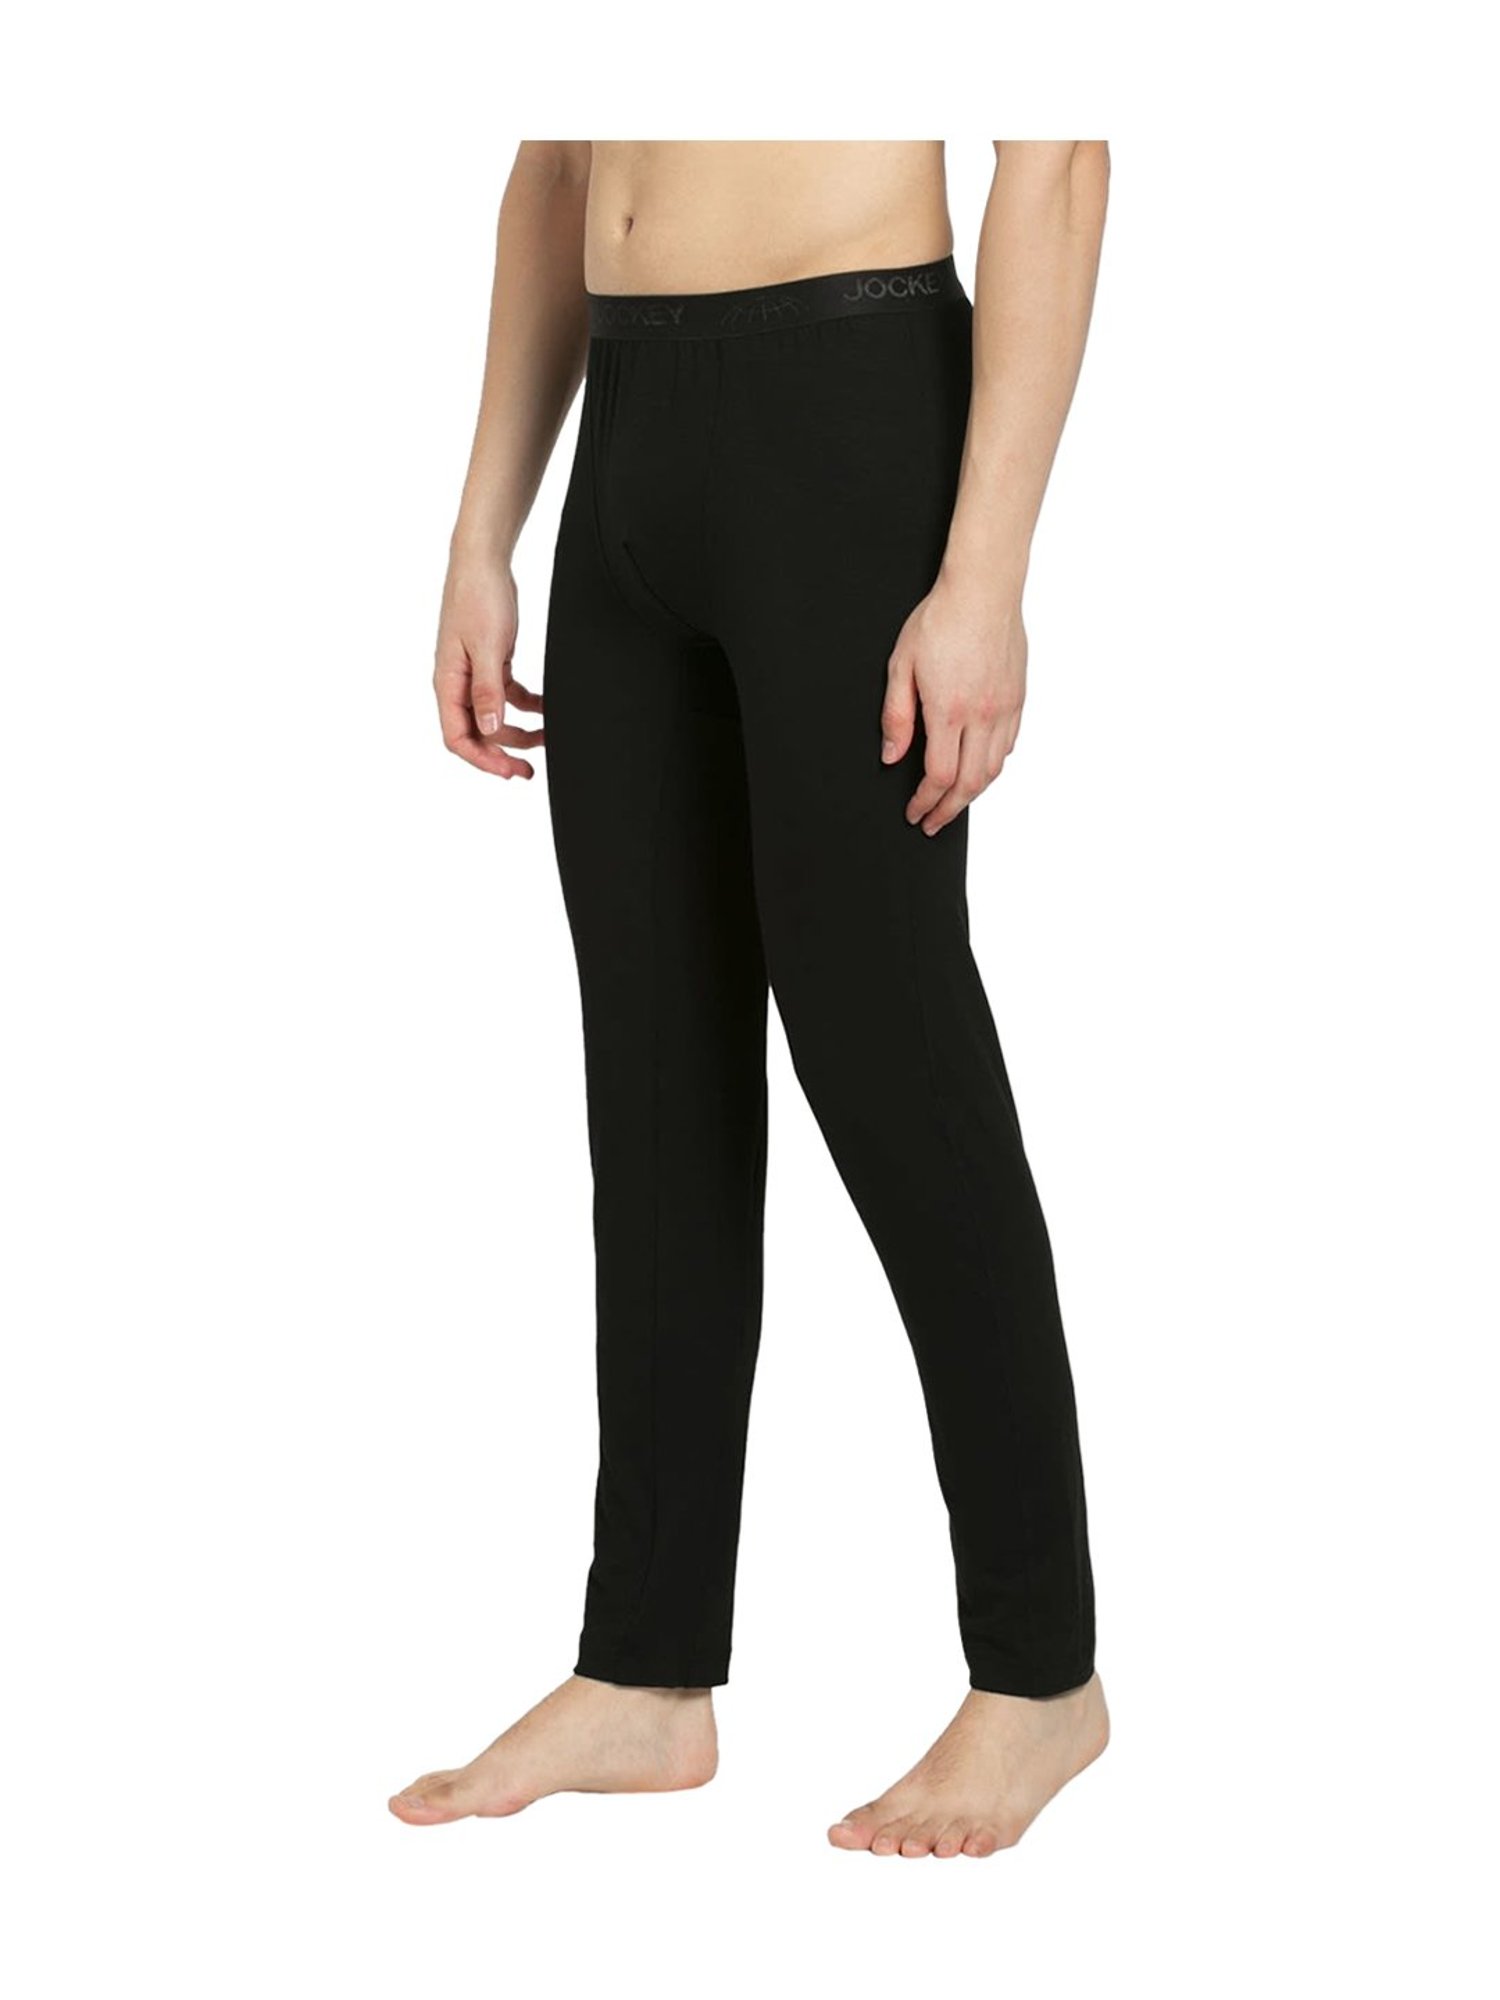 Jockey Women's Super Combed Cotton Side Zipper Pocket Yoga Pants